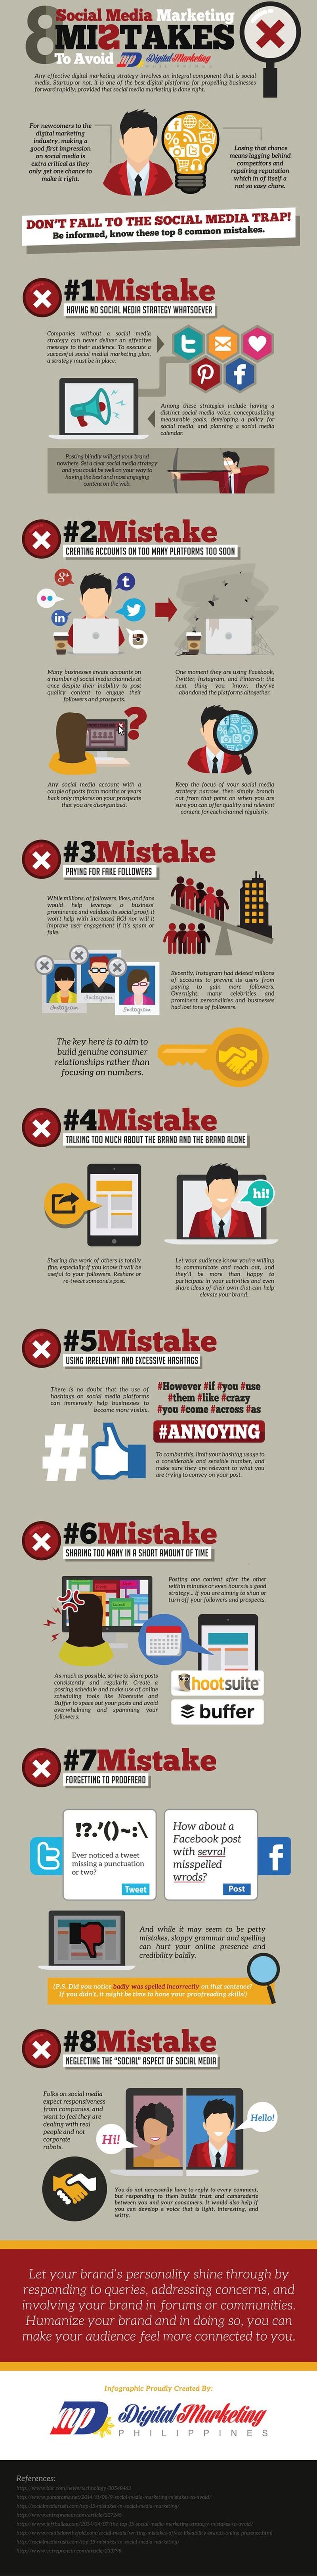 8 errores que deben evitarse en Social Media Marketing (infografía)